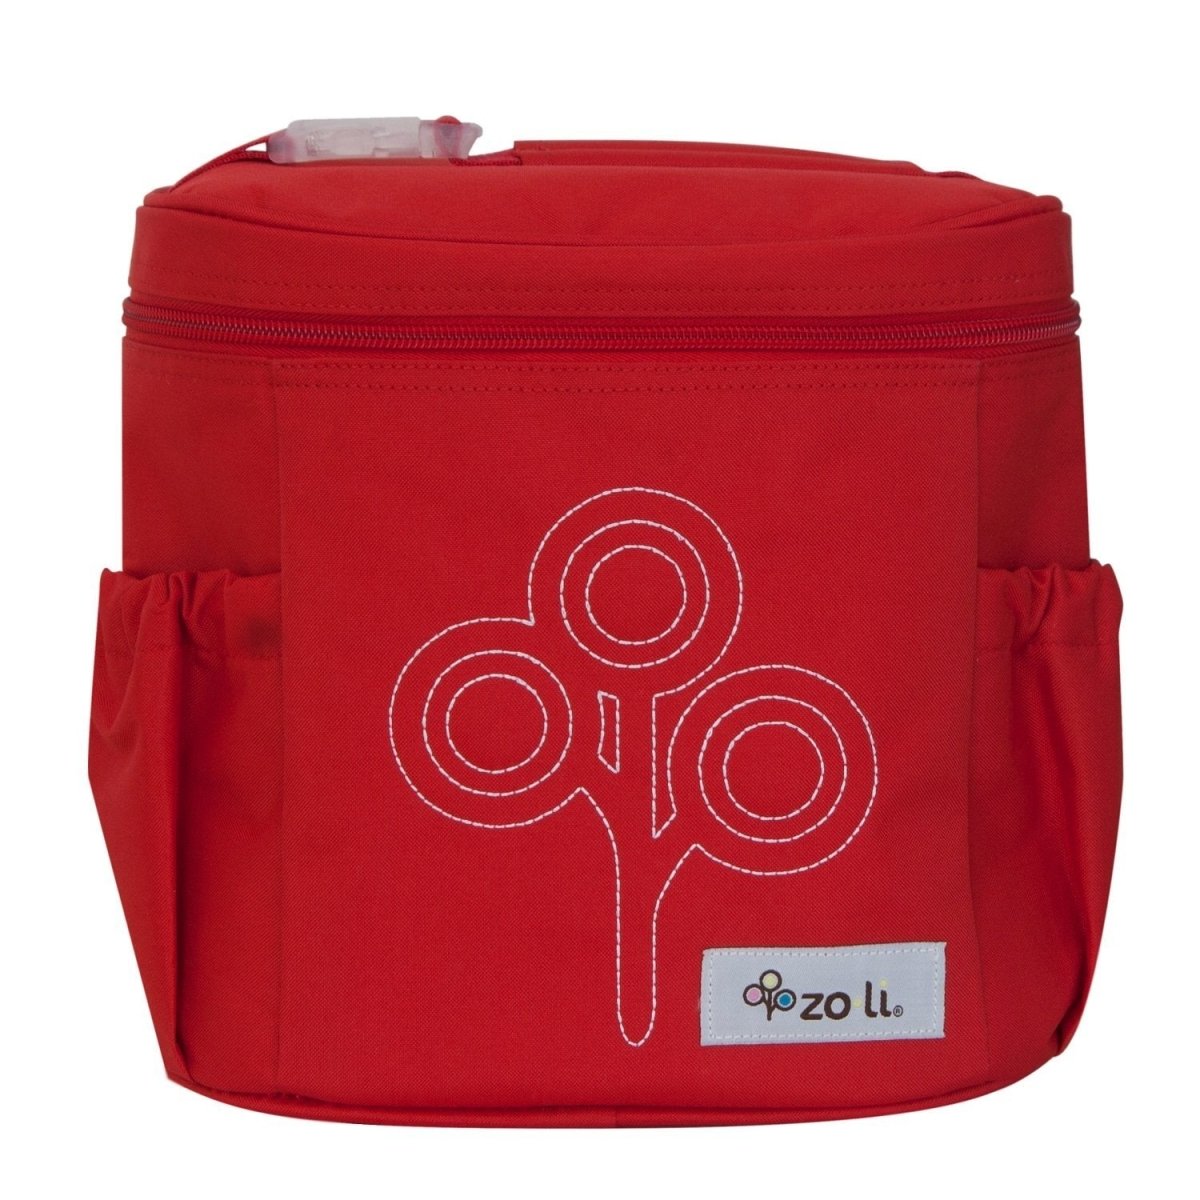 ZoLi NOM NOM Insulated Lunch Bag - Red - BF17PLYRD1